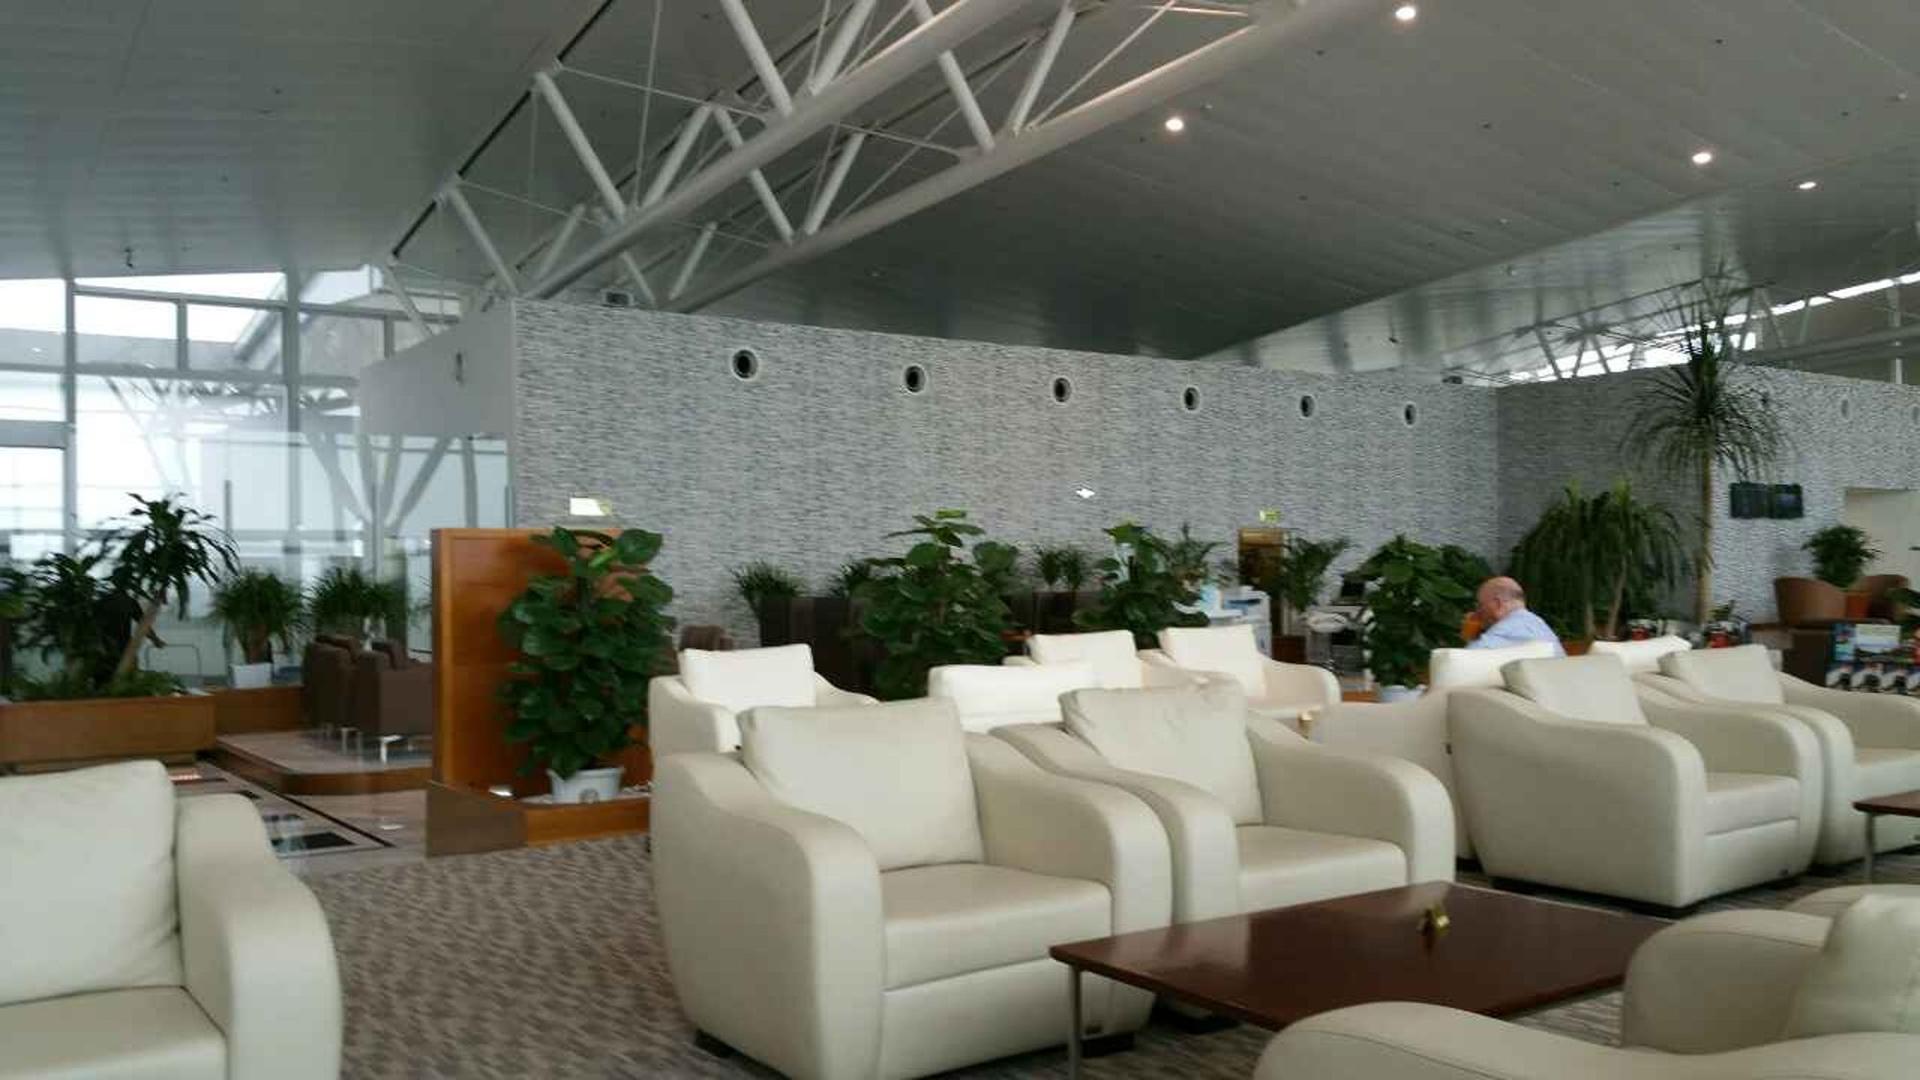 Noi Bai International Airport Business Lounge image 1 of 26